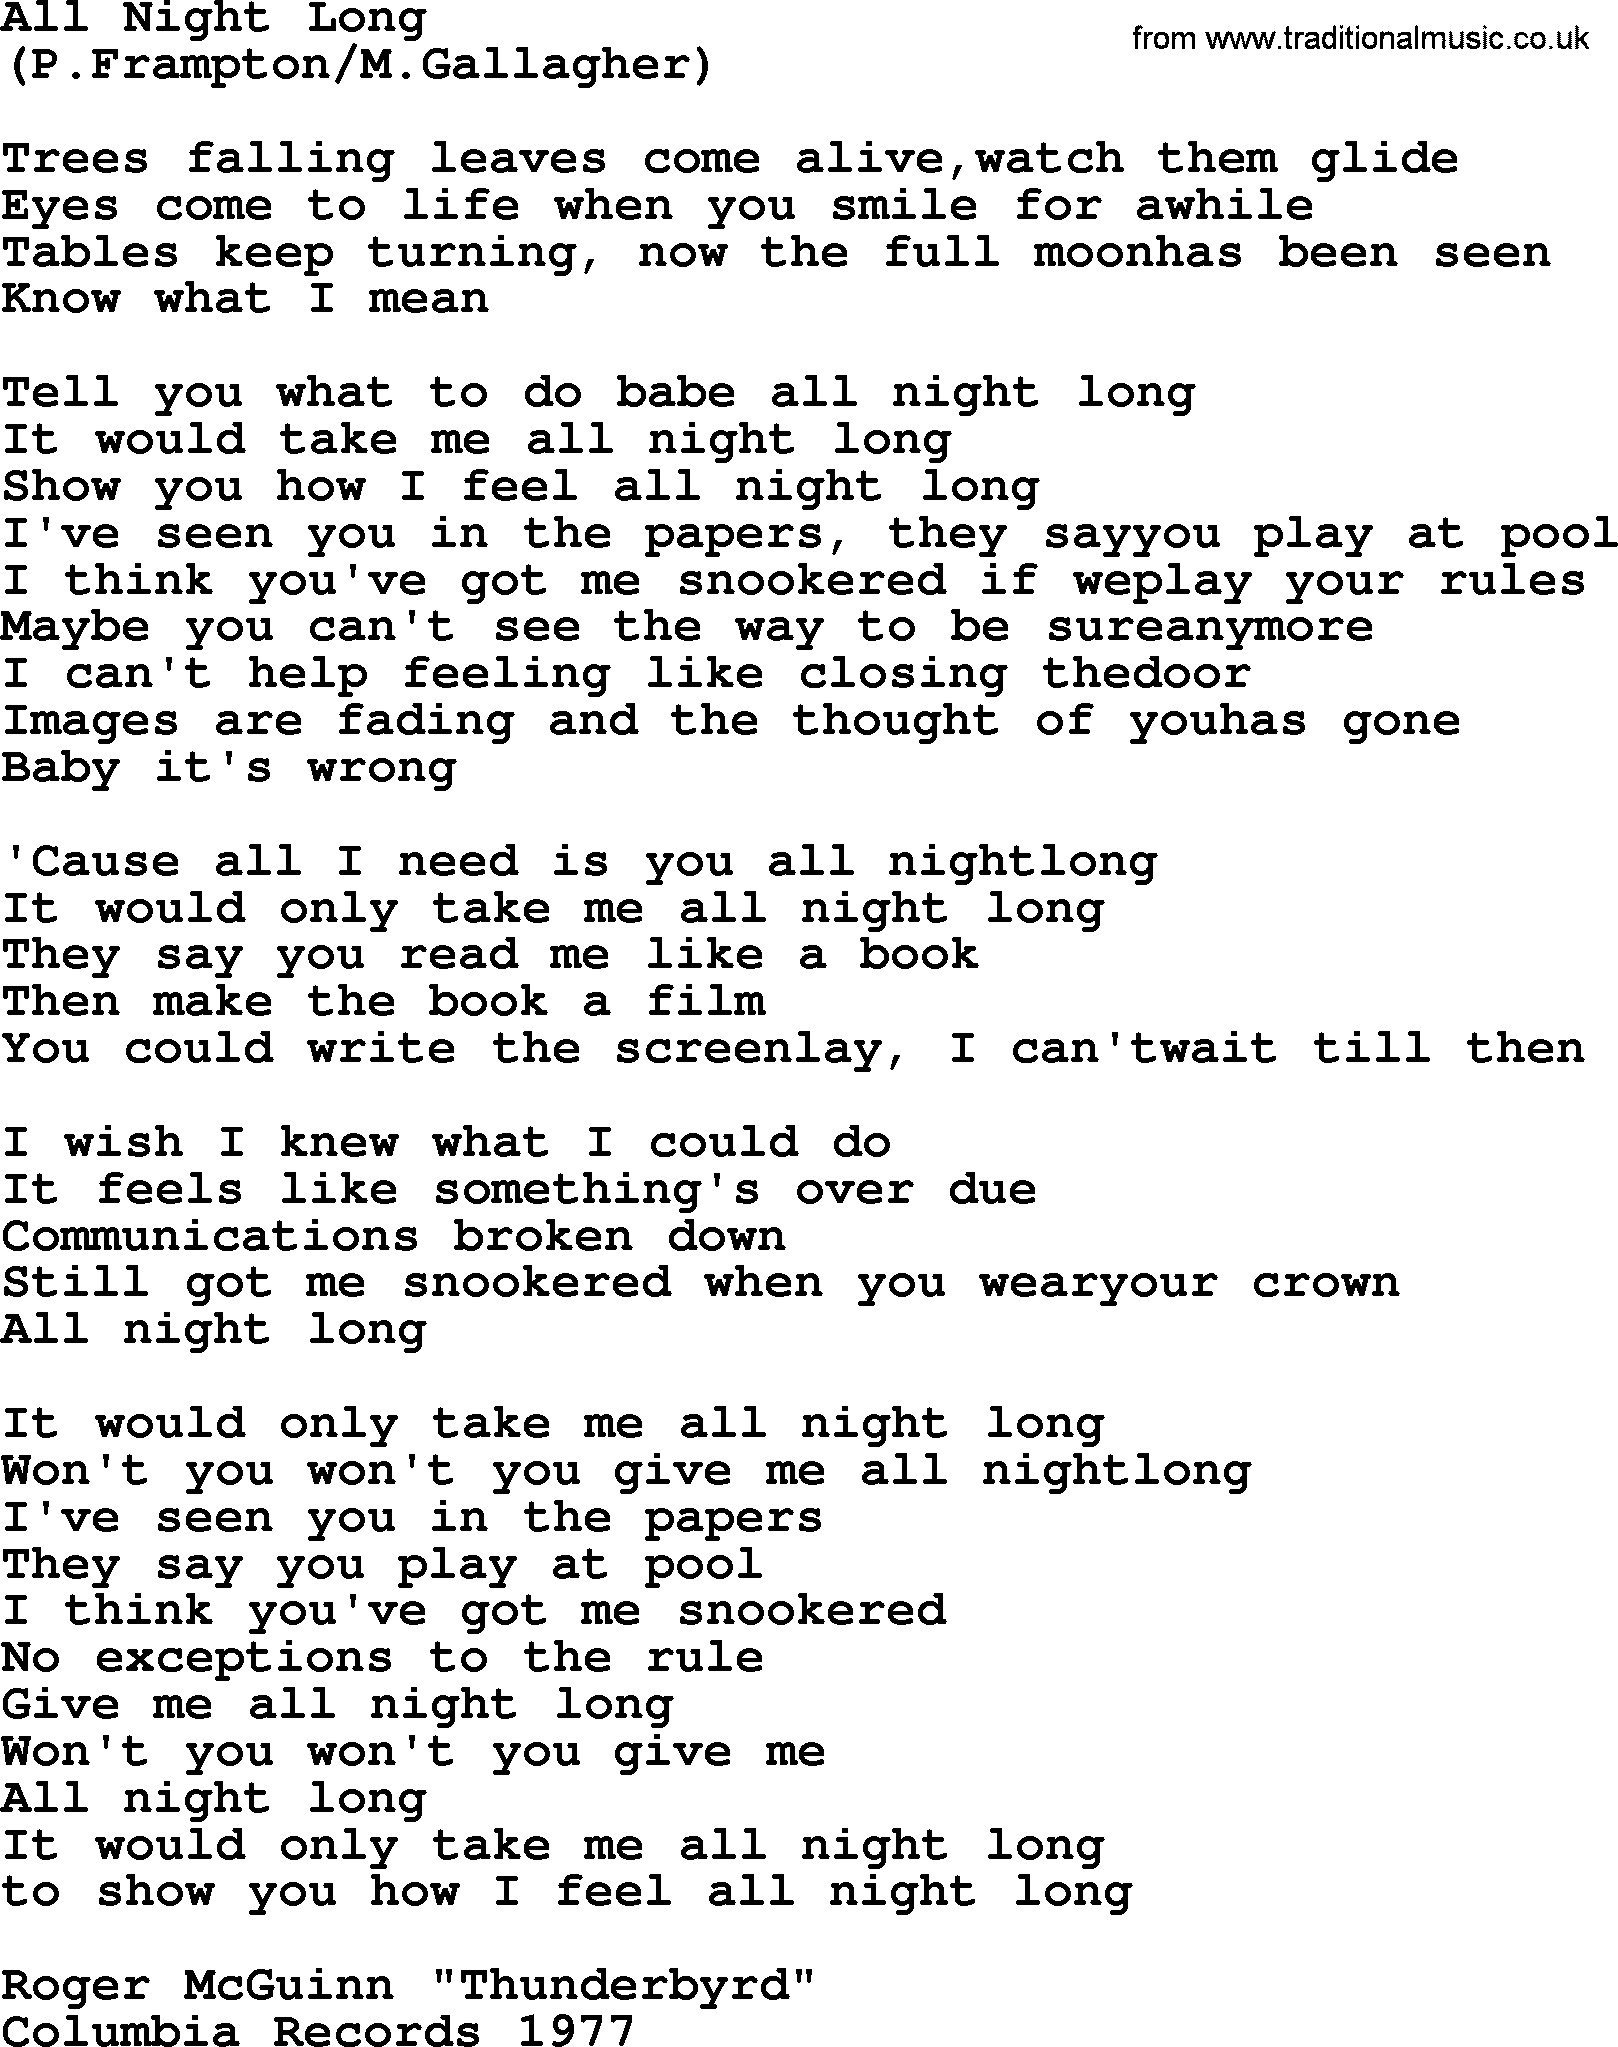 The Byrds song All Night Long, lyrics